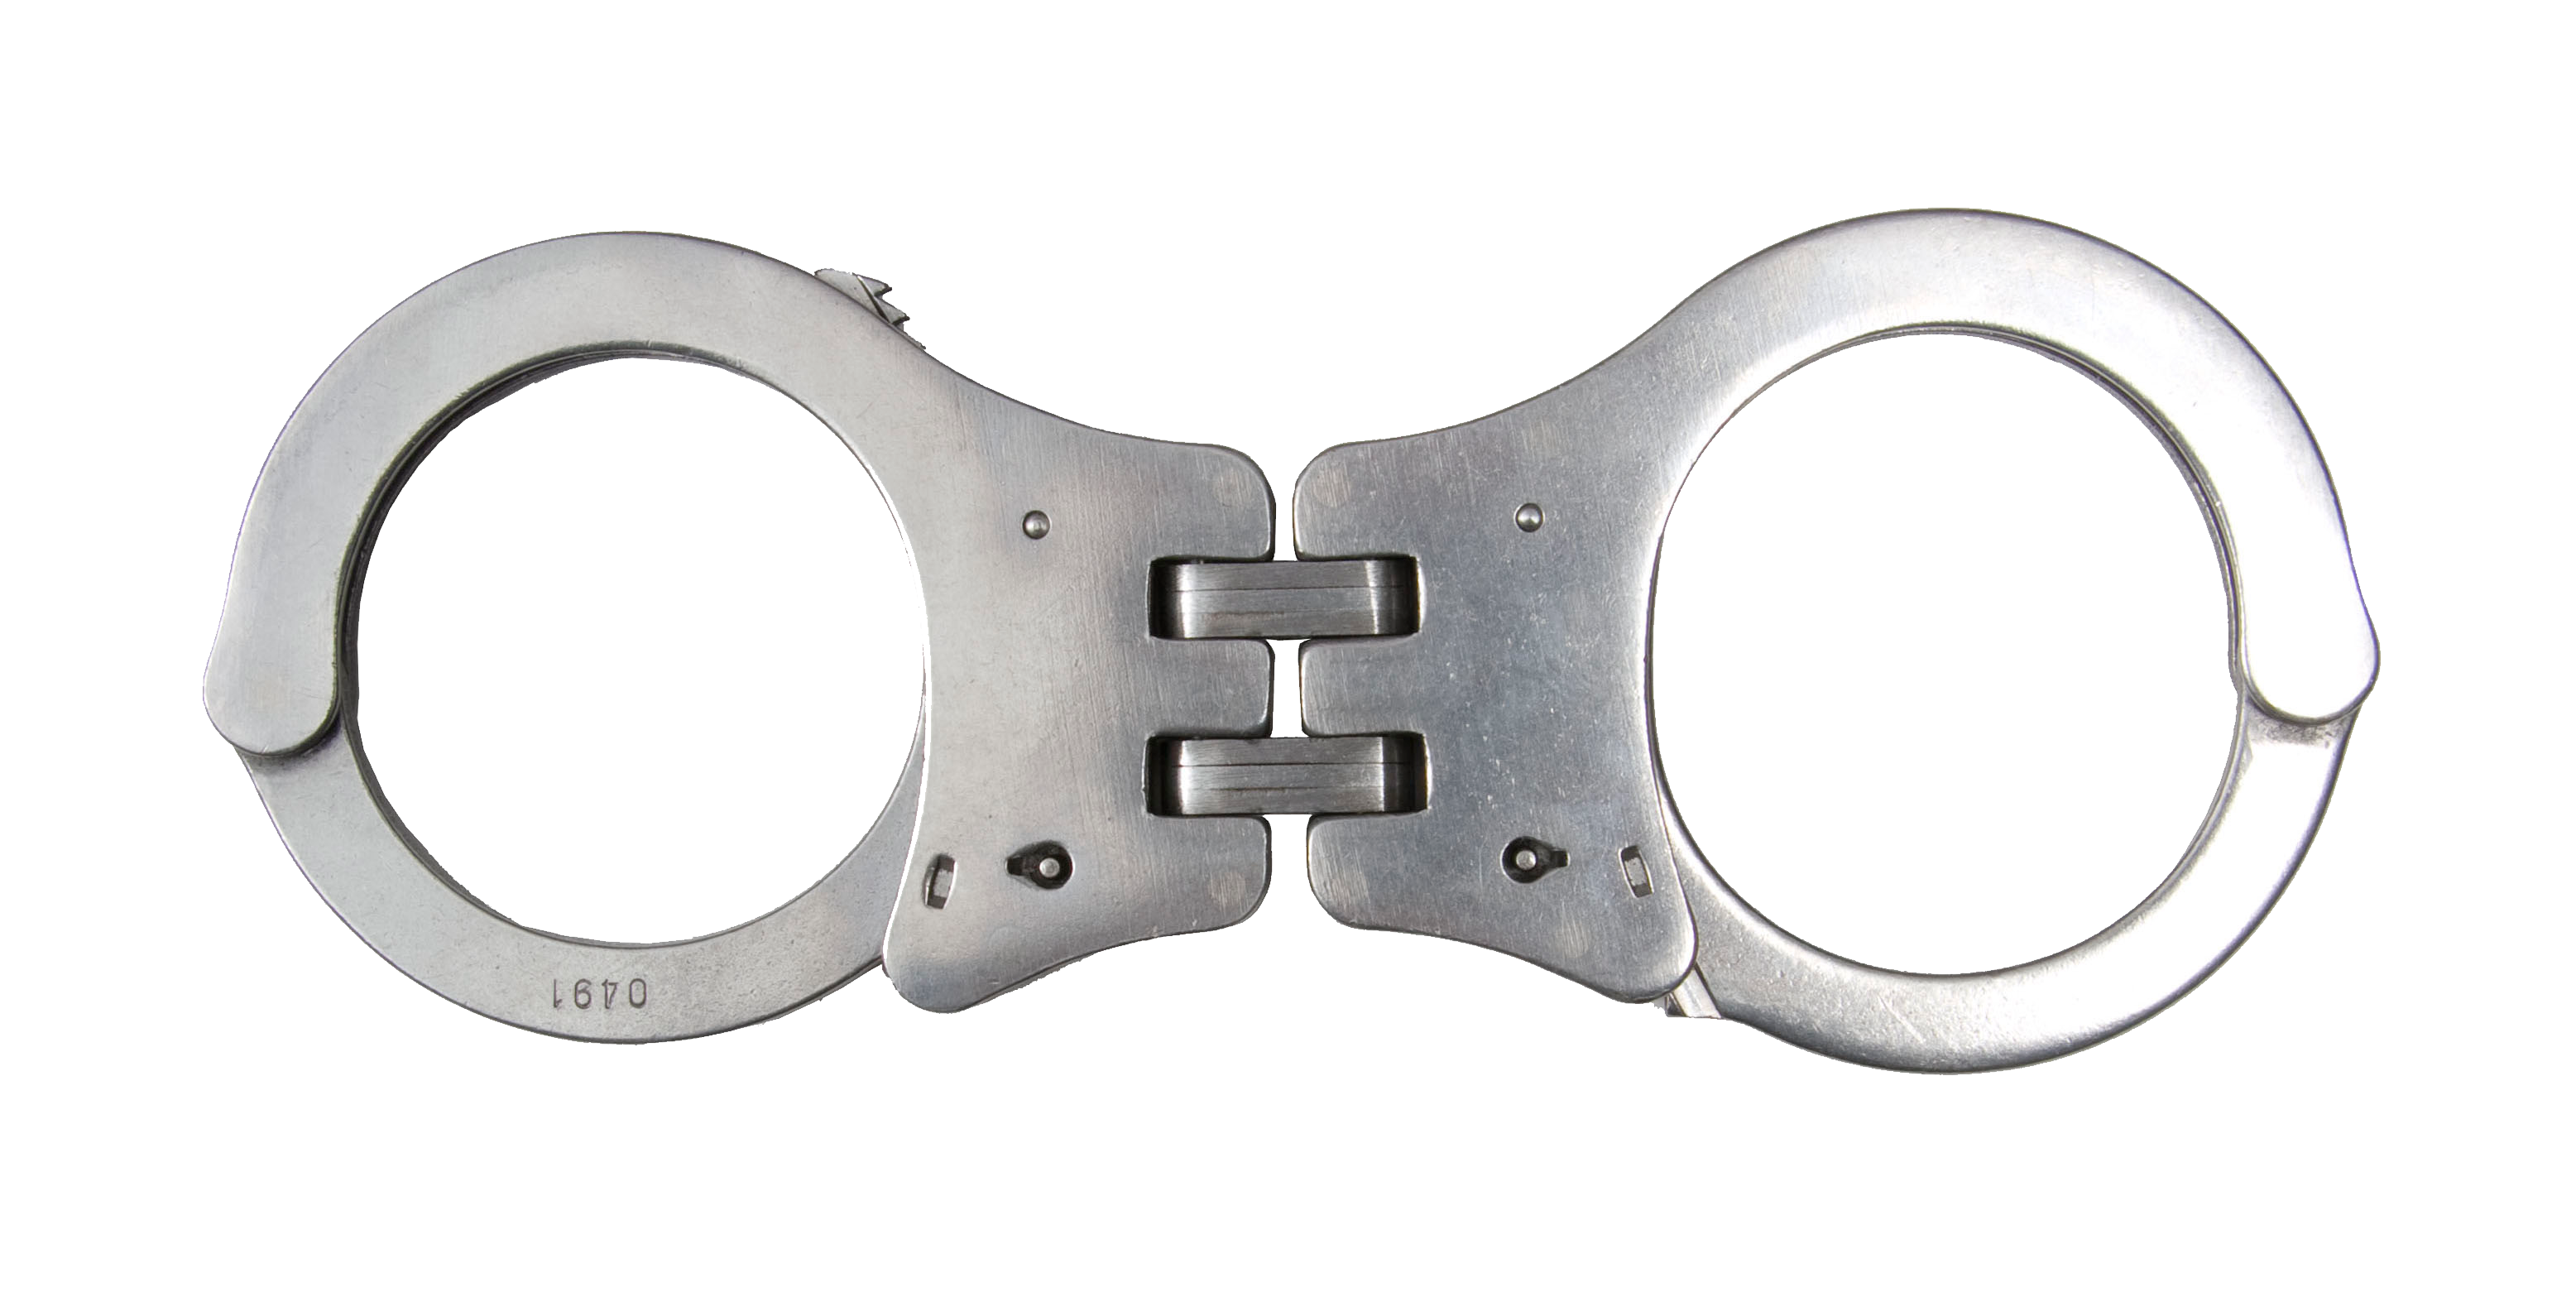 Arrestment Handcuffs